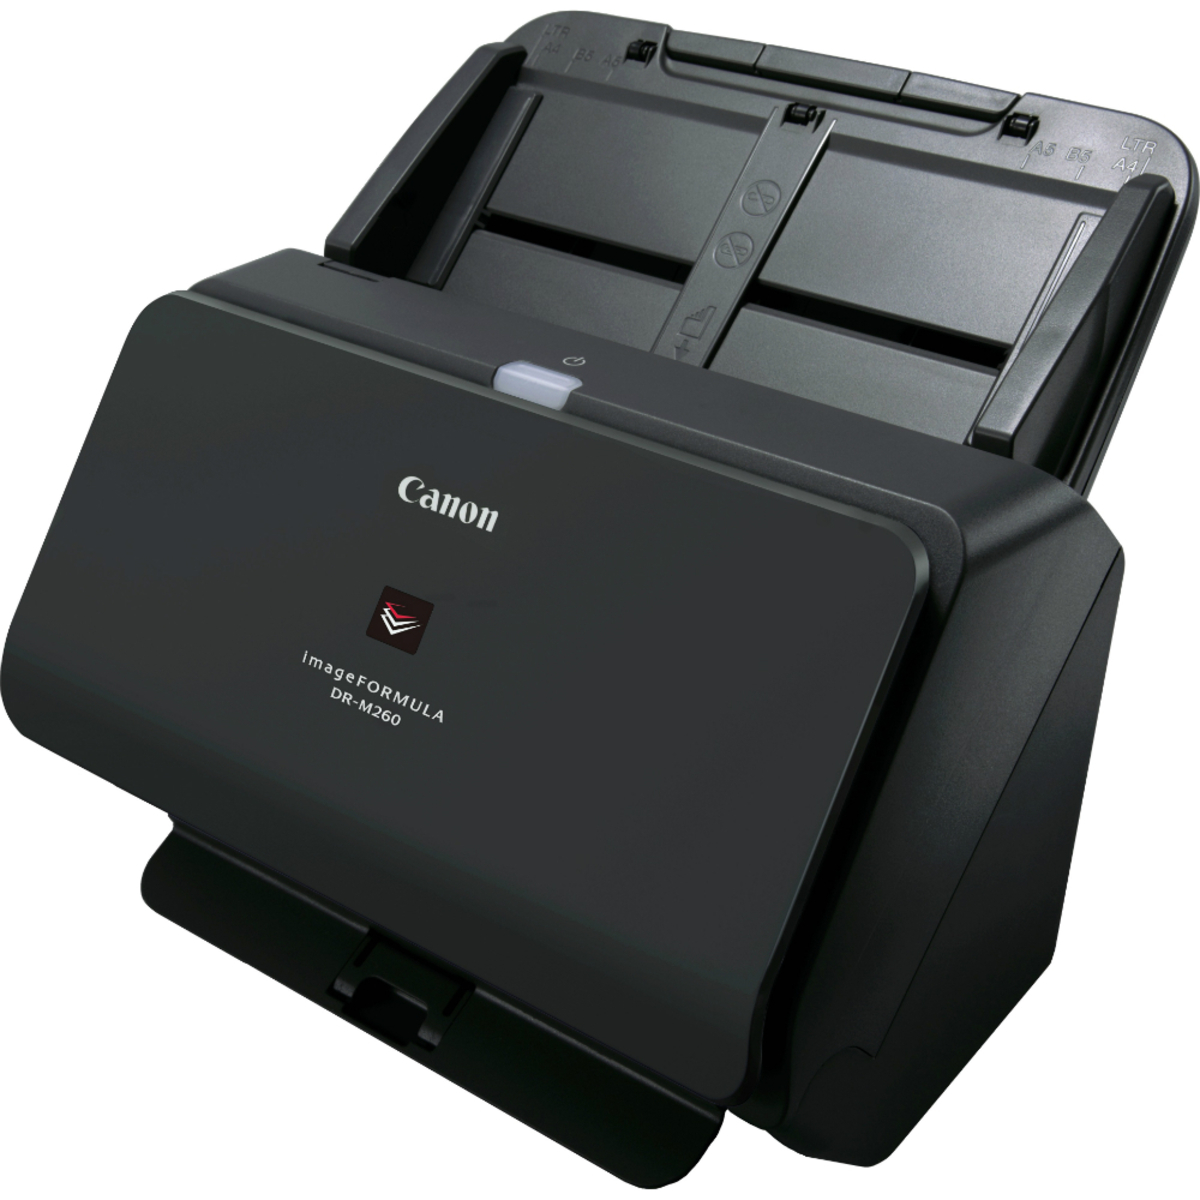 Сканер Canon image Formula DR-M260 (2405C003) (Цвет: Black)